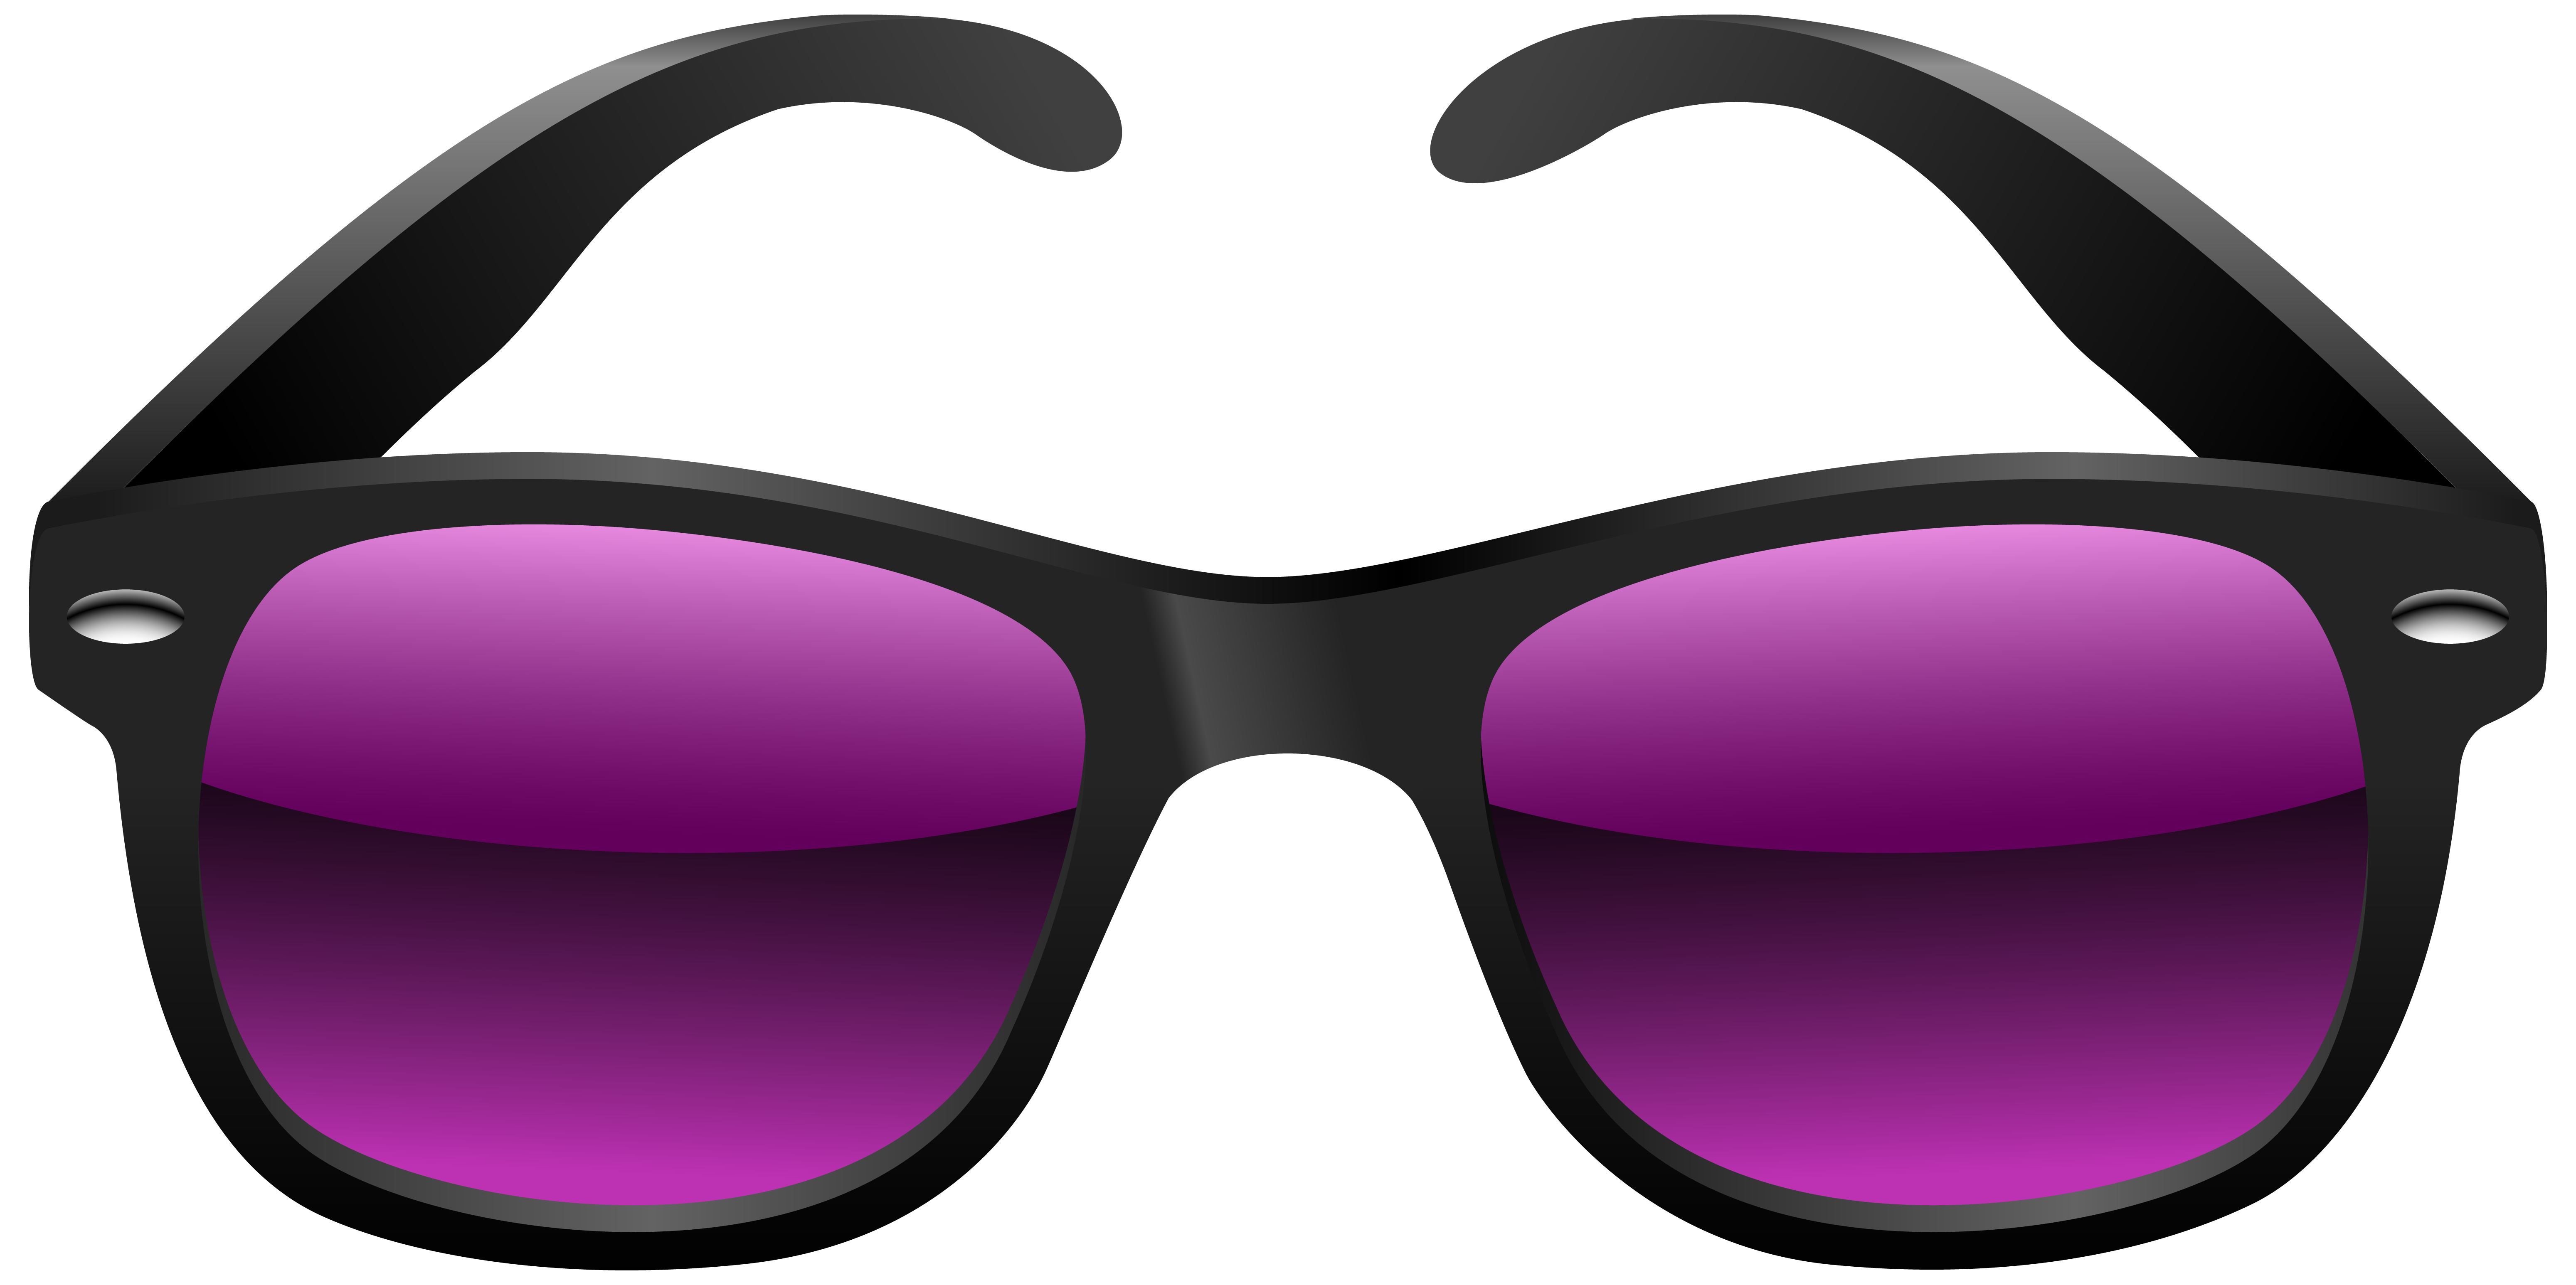 Sunglasses Clip art - Black and Purple Sunglasses PNG Clipart Image png